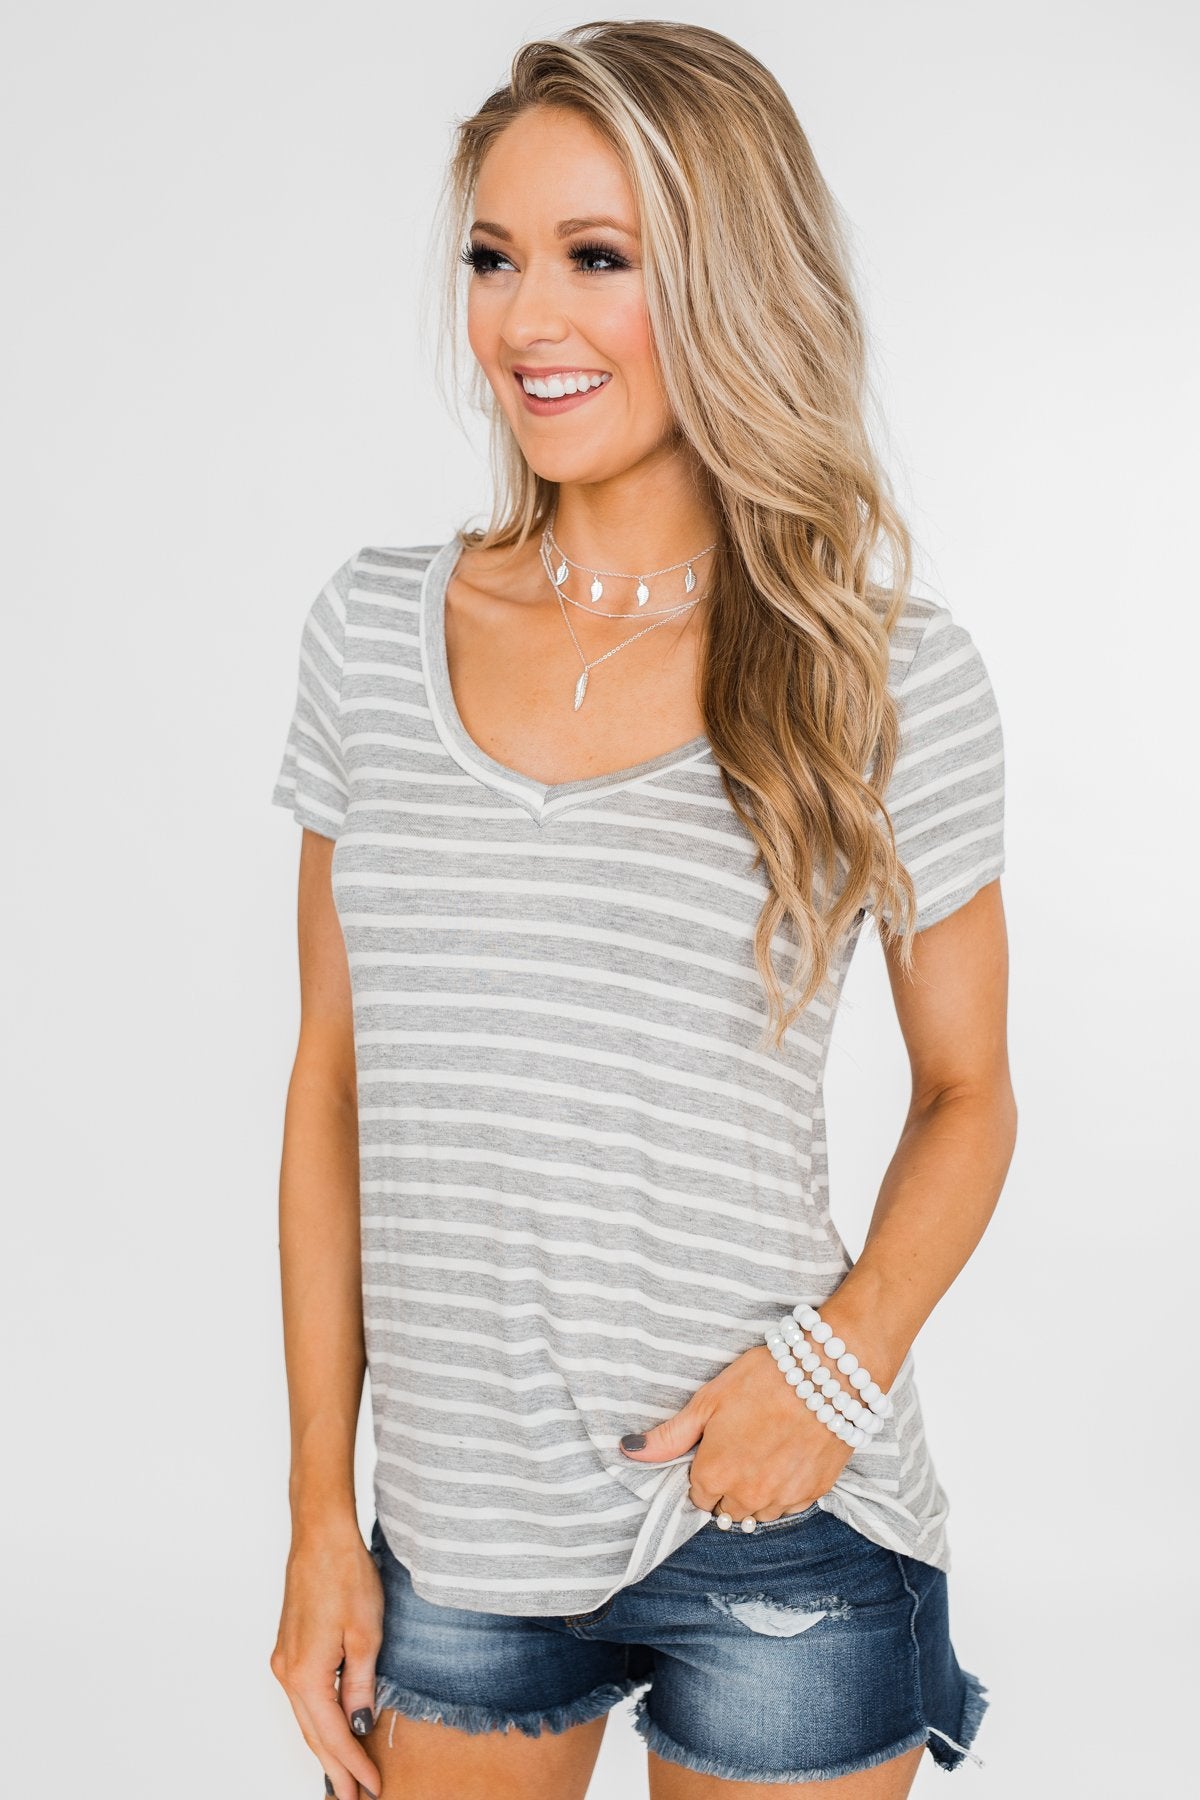 Heather Grey & White Striped V-Neck Top